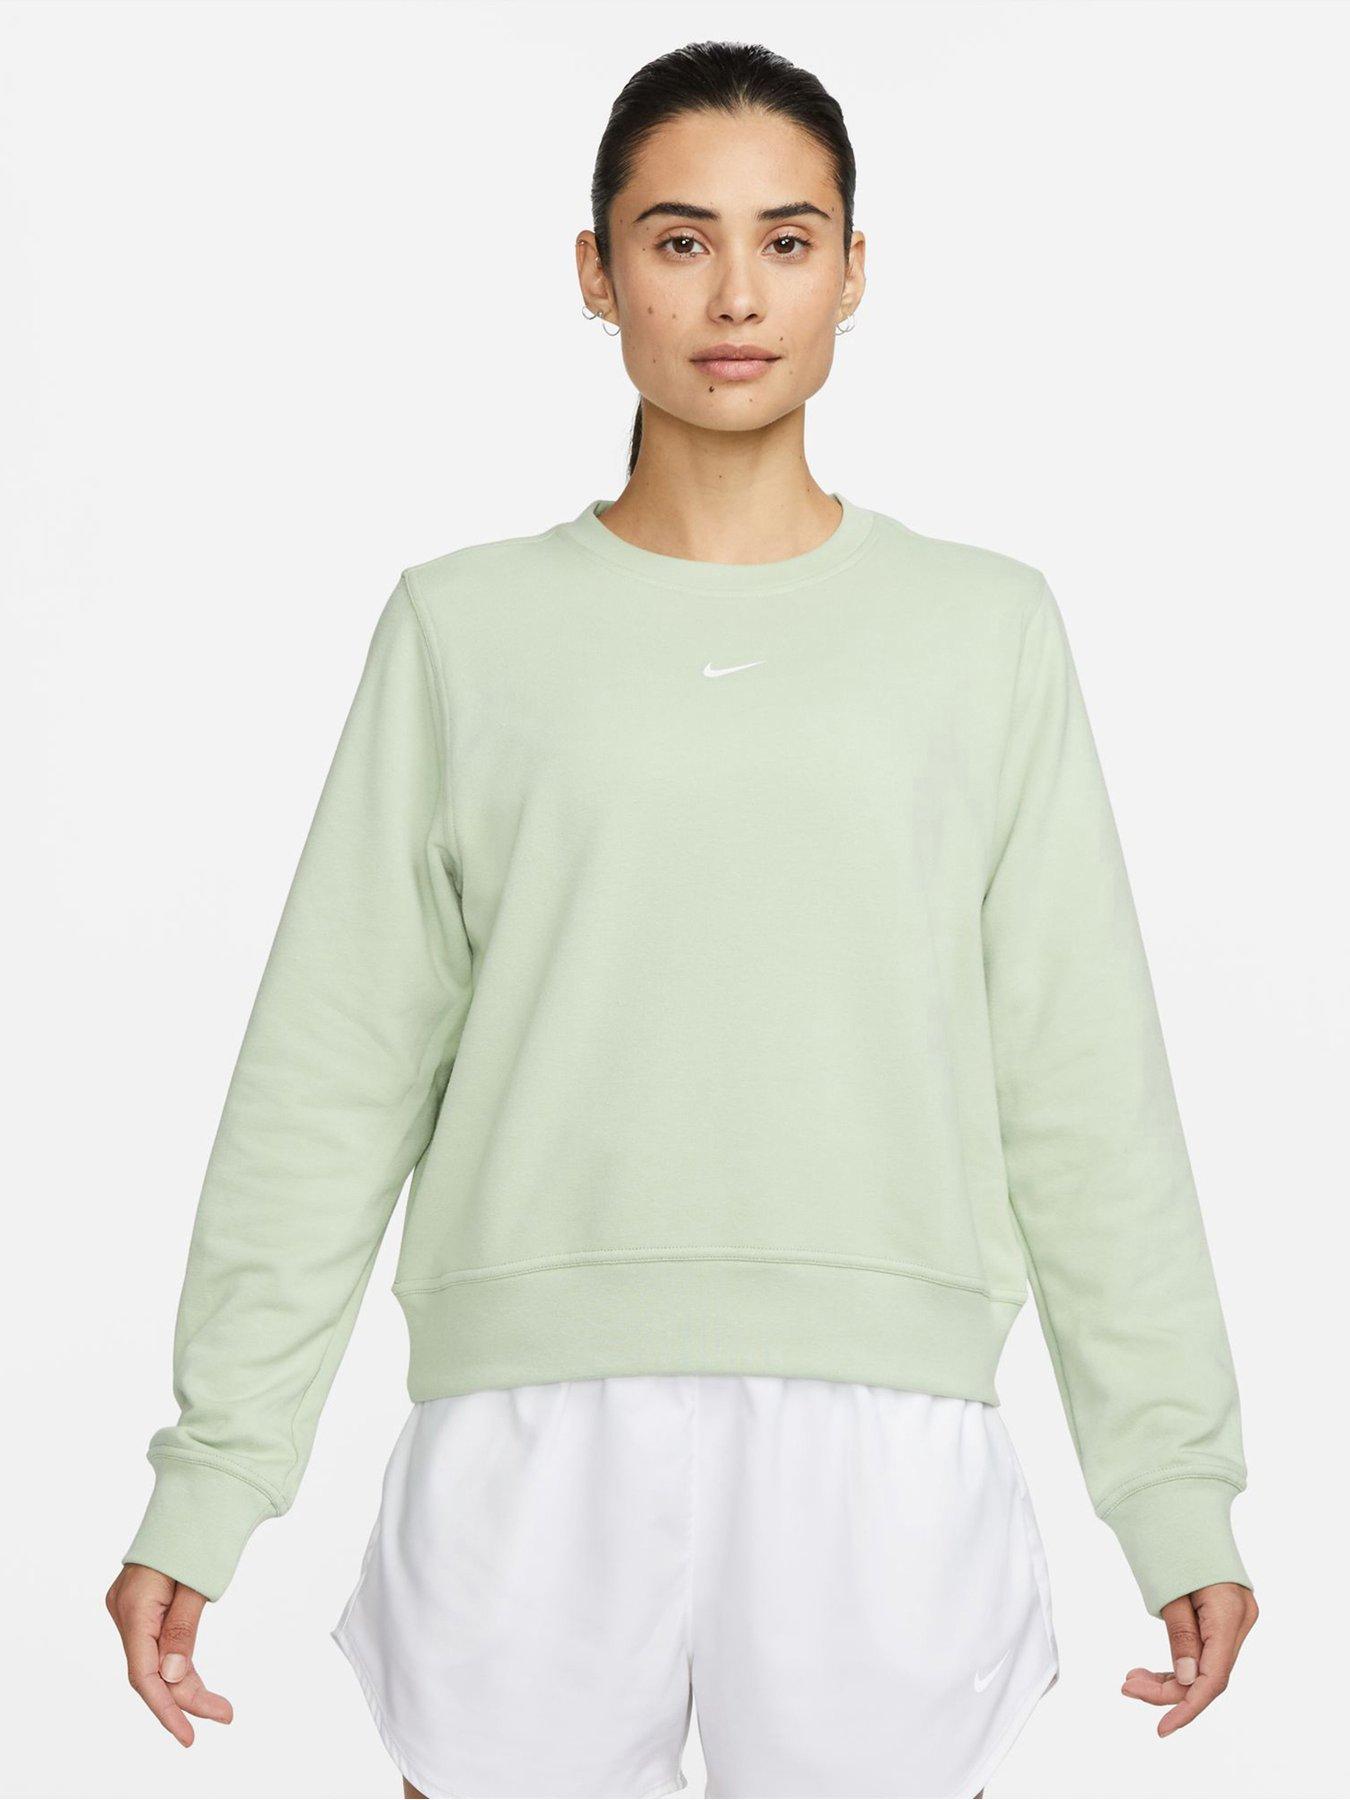 Nike Women's Yoga French Terry Long Sleeve Top